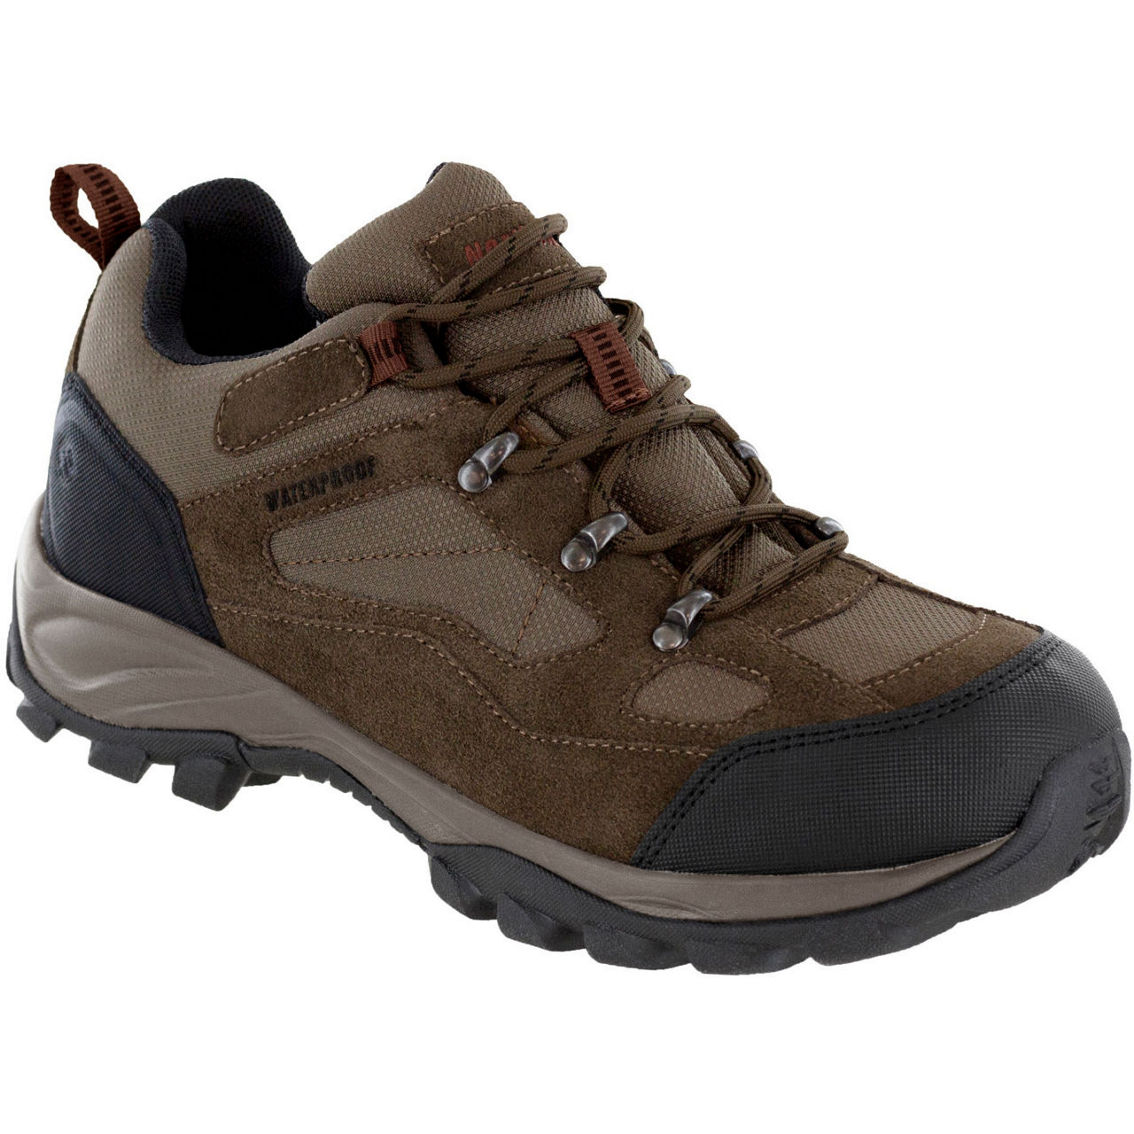 Northside Ranger Waterproof Hiking Shoes | Work & Outdoor | Shoes ...